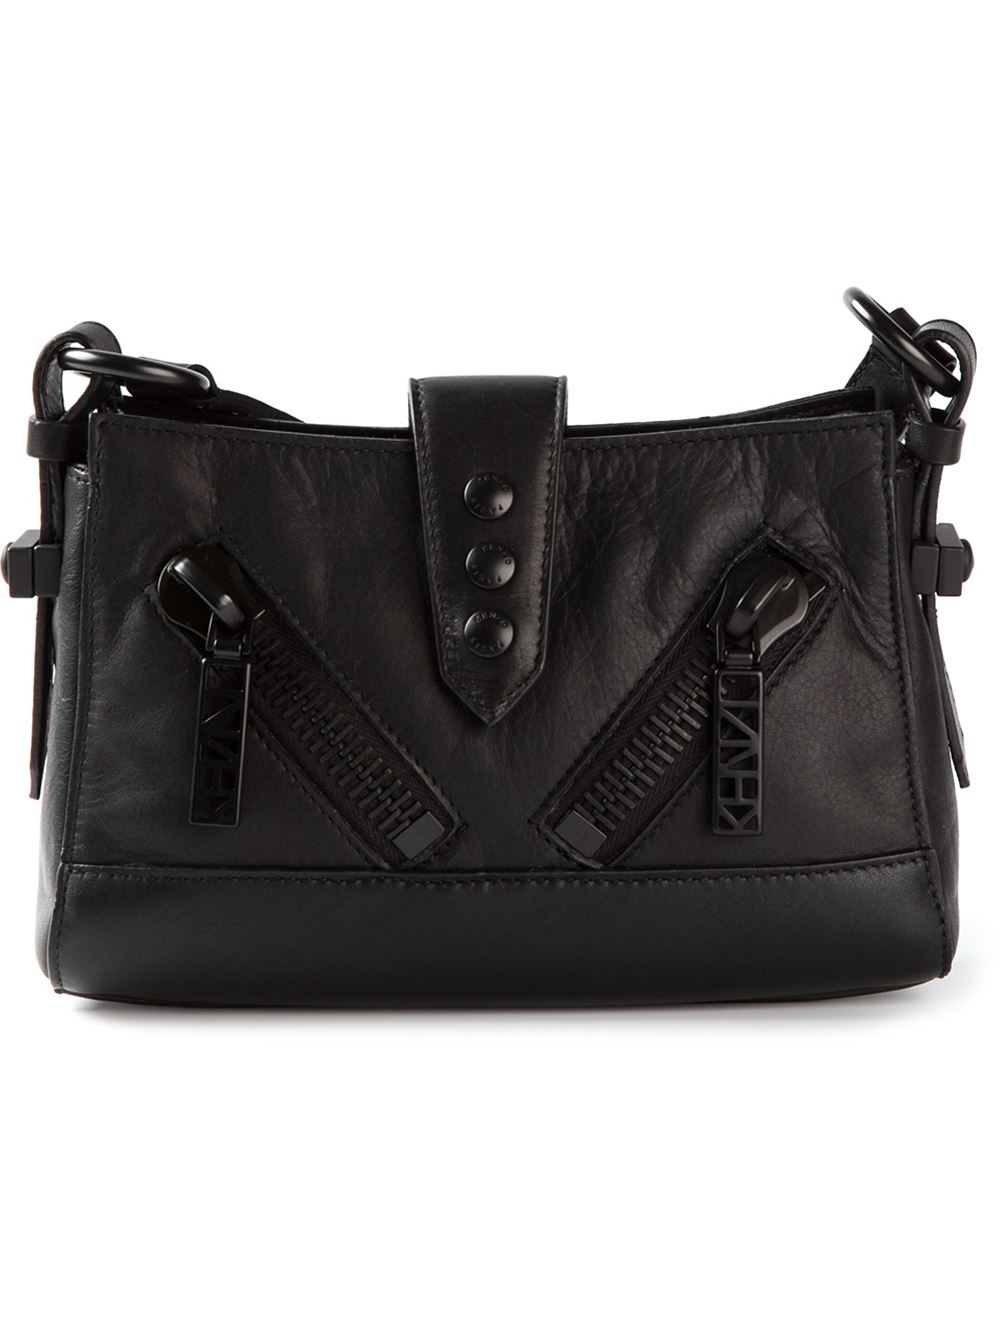 KENZO Mini Kalifornia Shoulder Bag in Black - Lyst